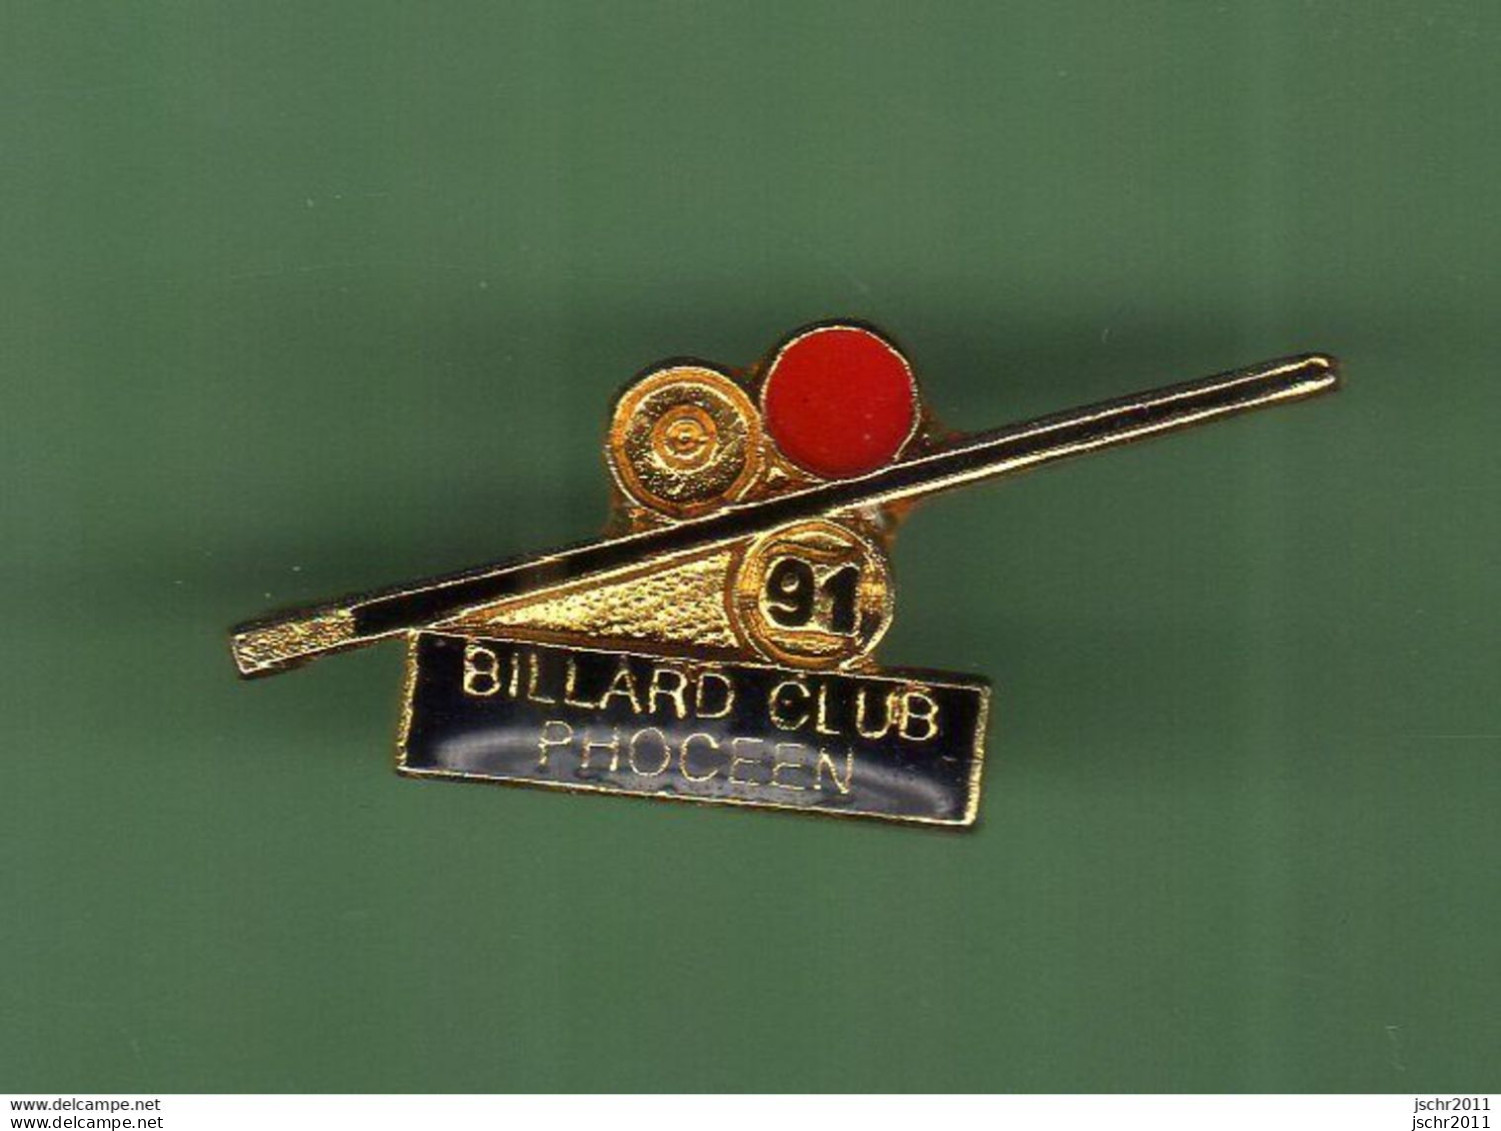 BILLARD *** CLUB PHOCEEN *** WW 5056 - Billiards